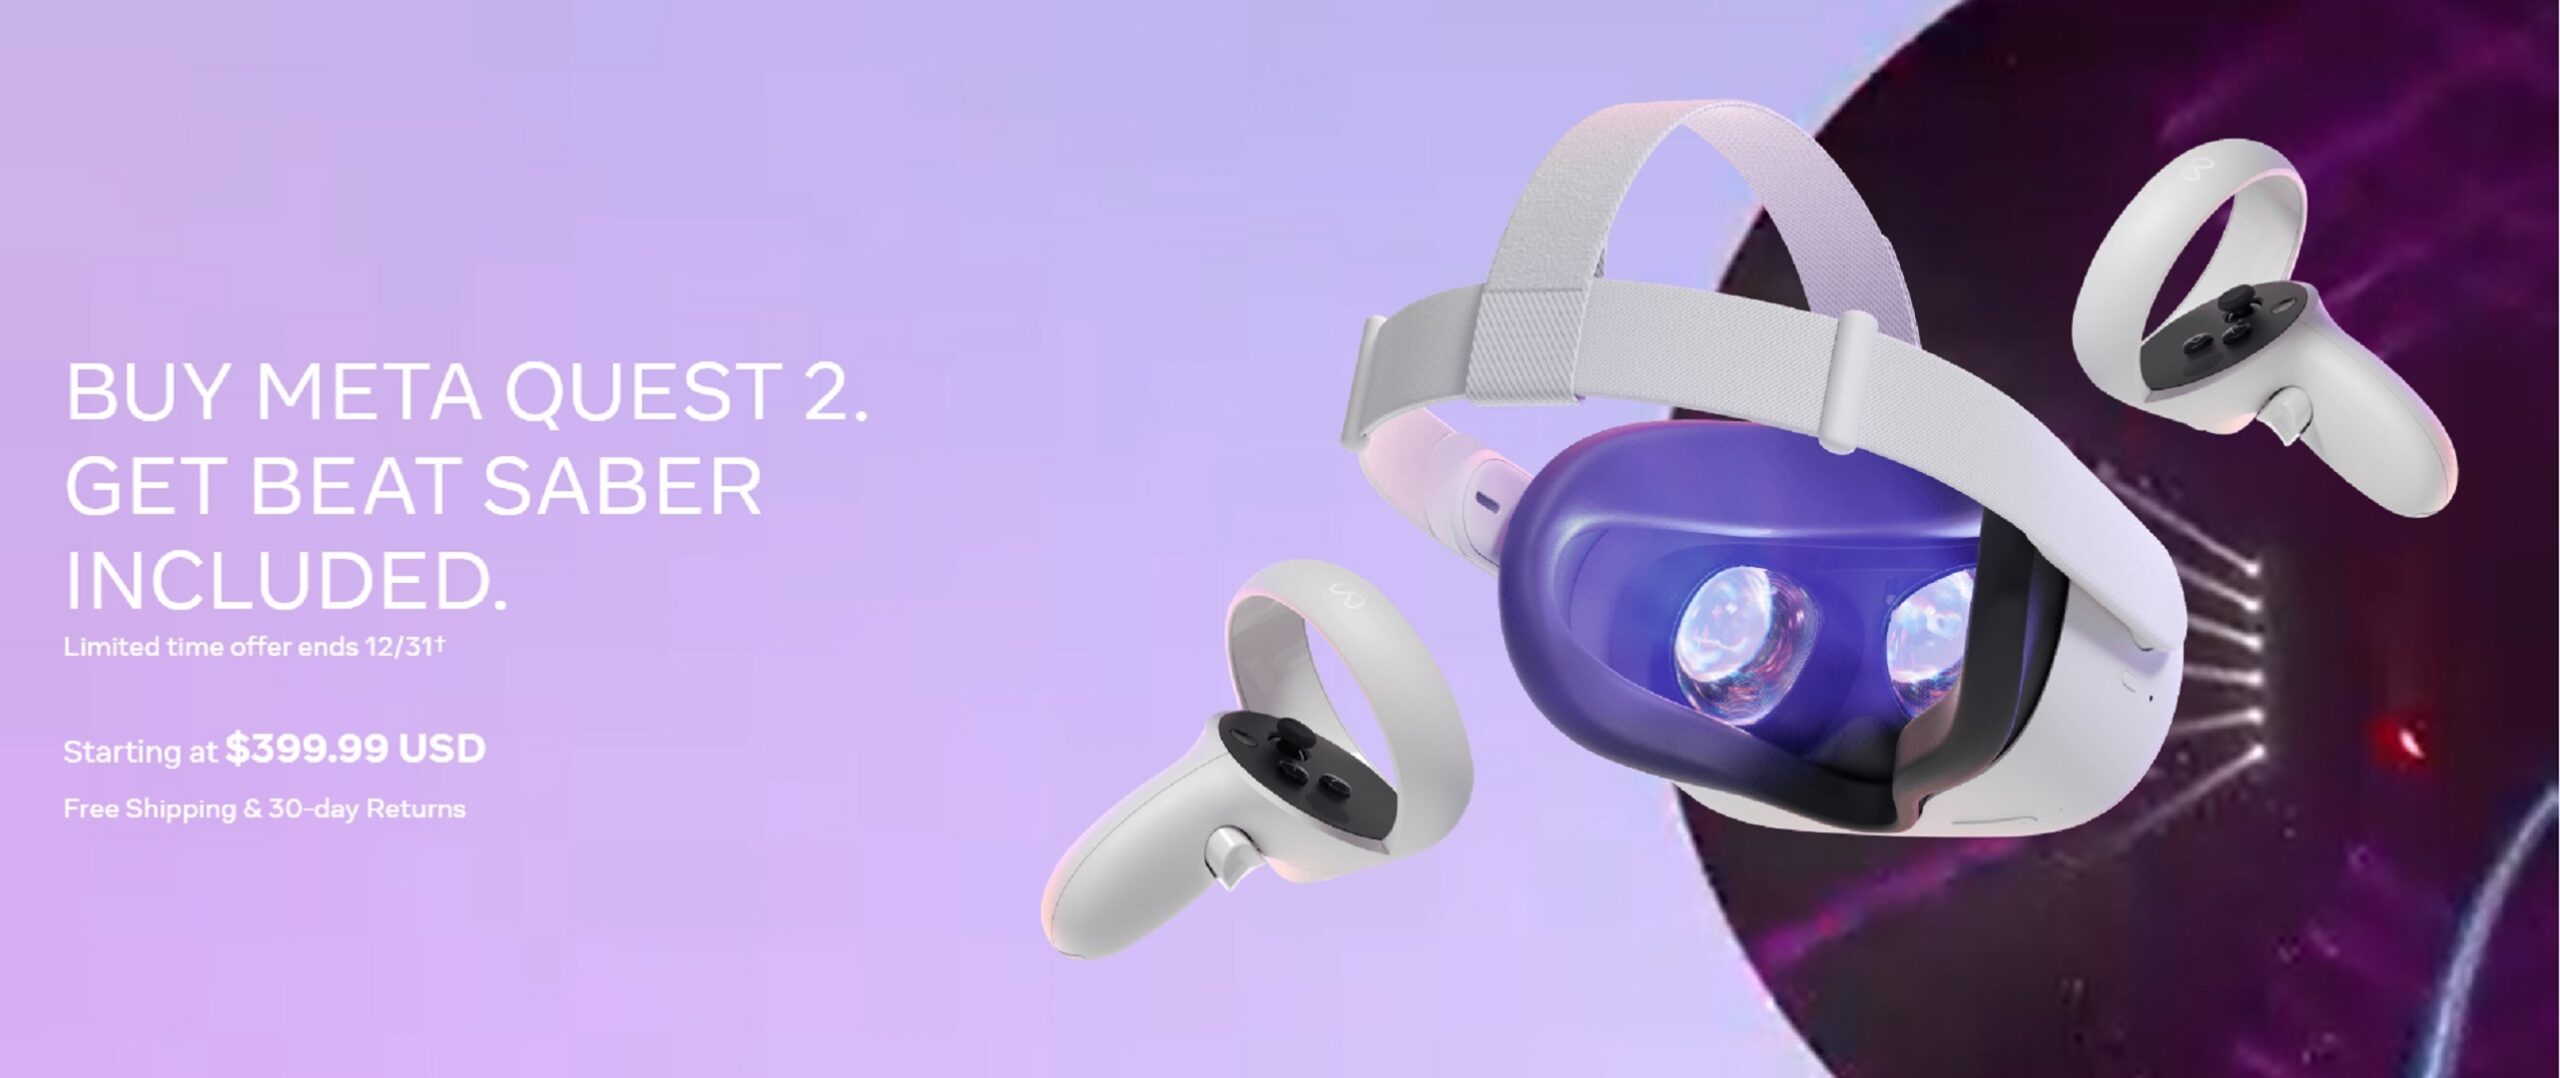 Meta Quest 2 Iron Man VR, purchase